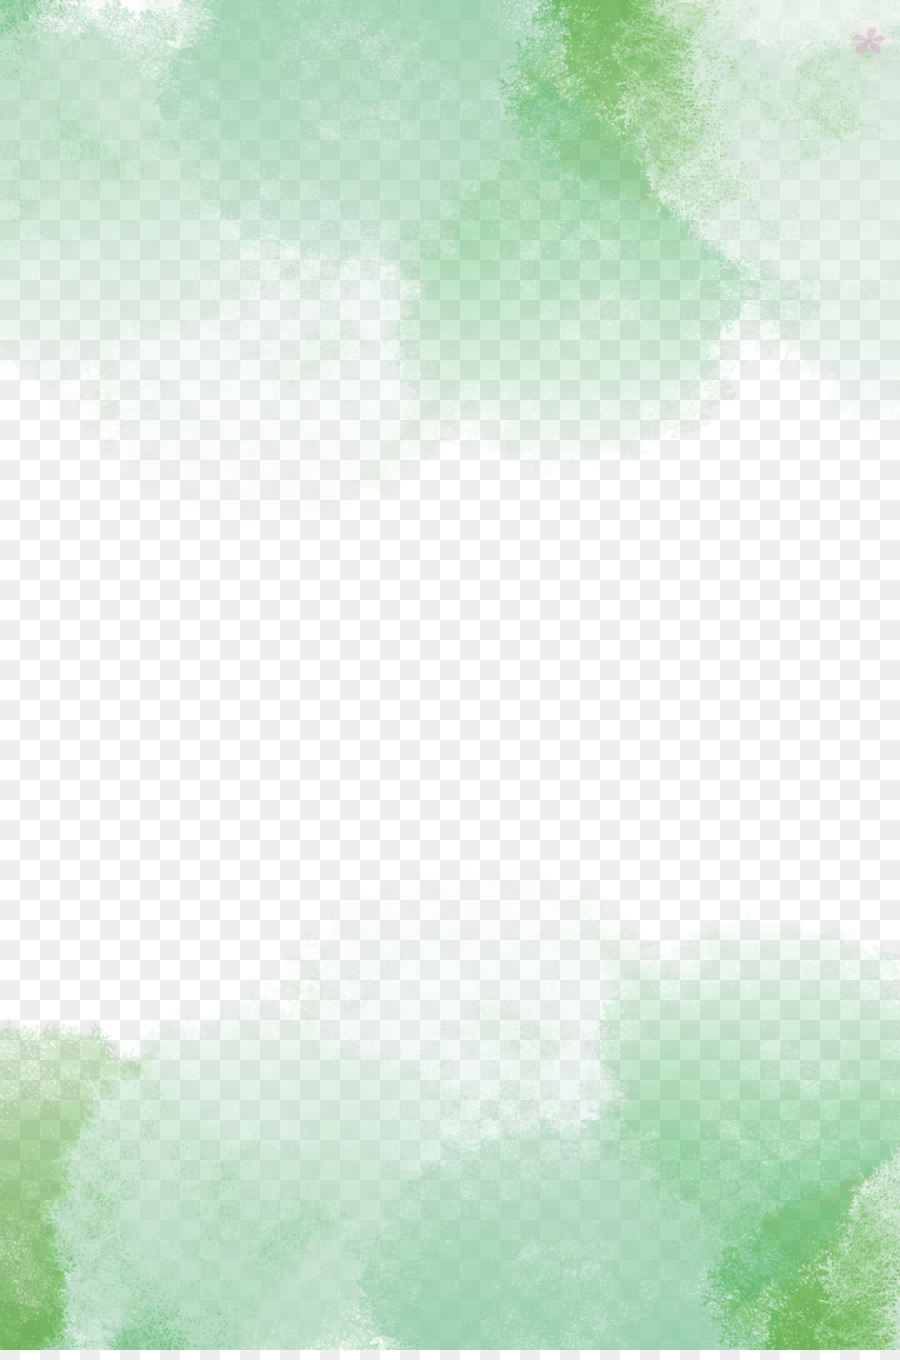 Chroma key Fundal Icon - Green background png download - 2268*3402 - Free Transparent Chroma Key png Download.